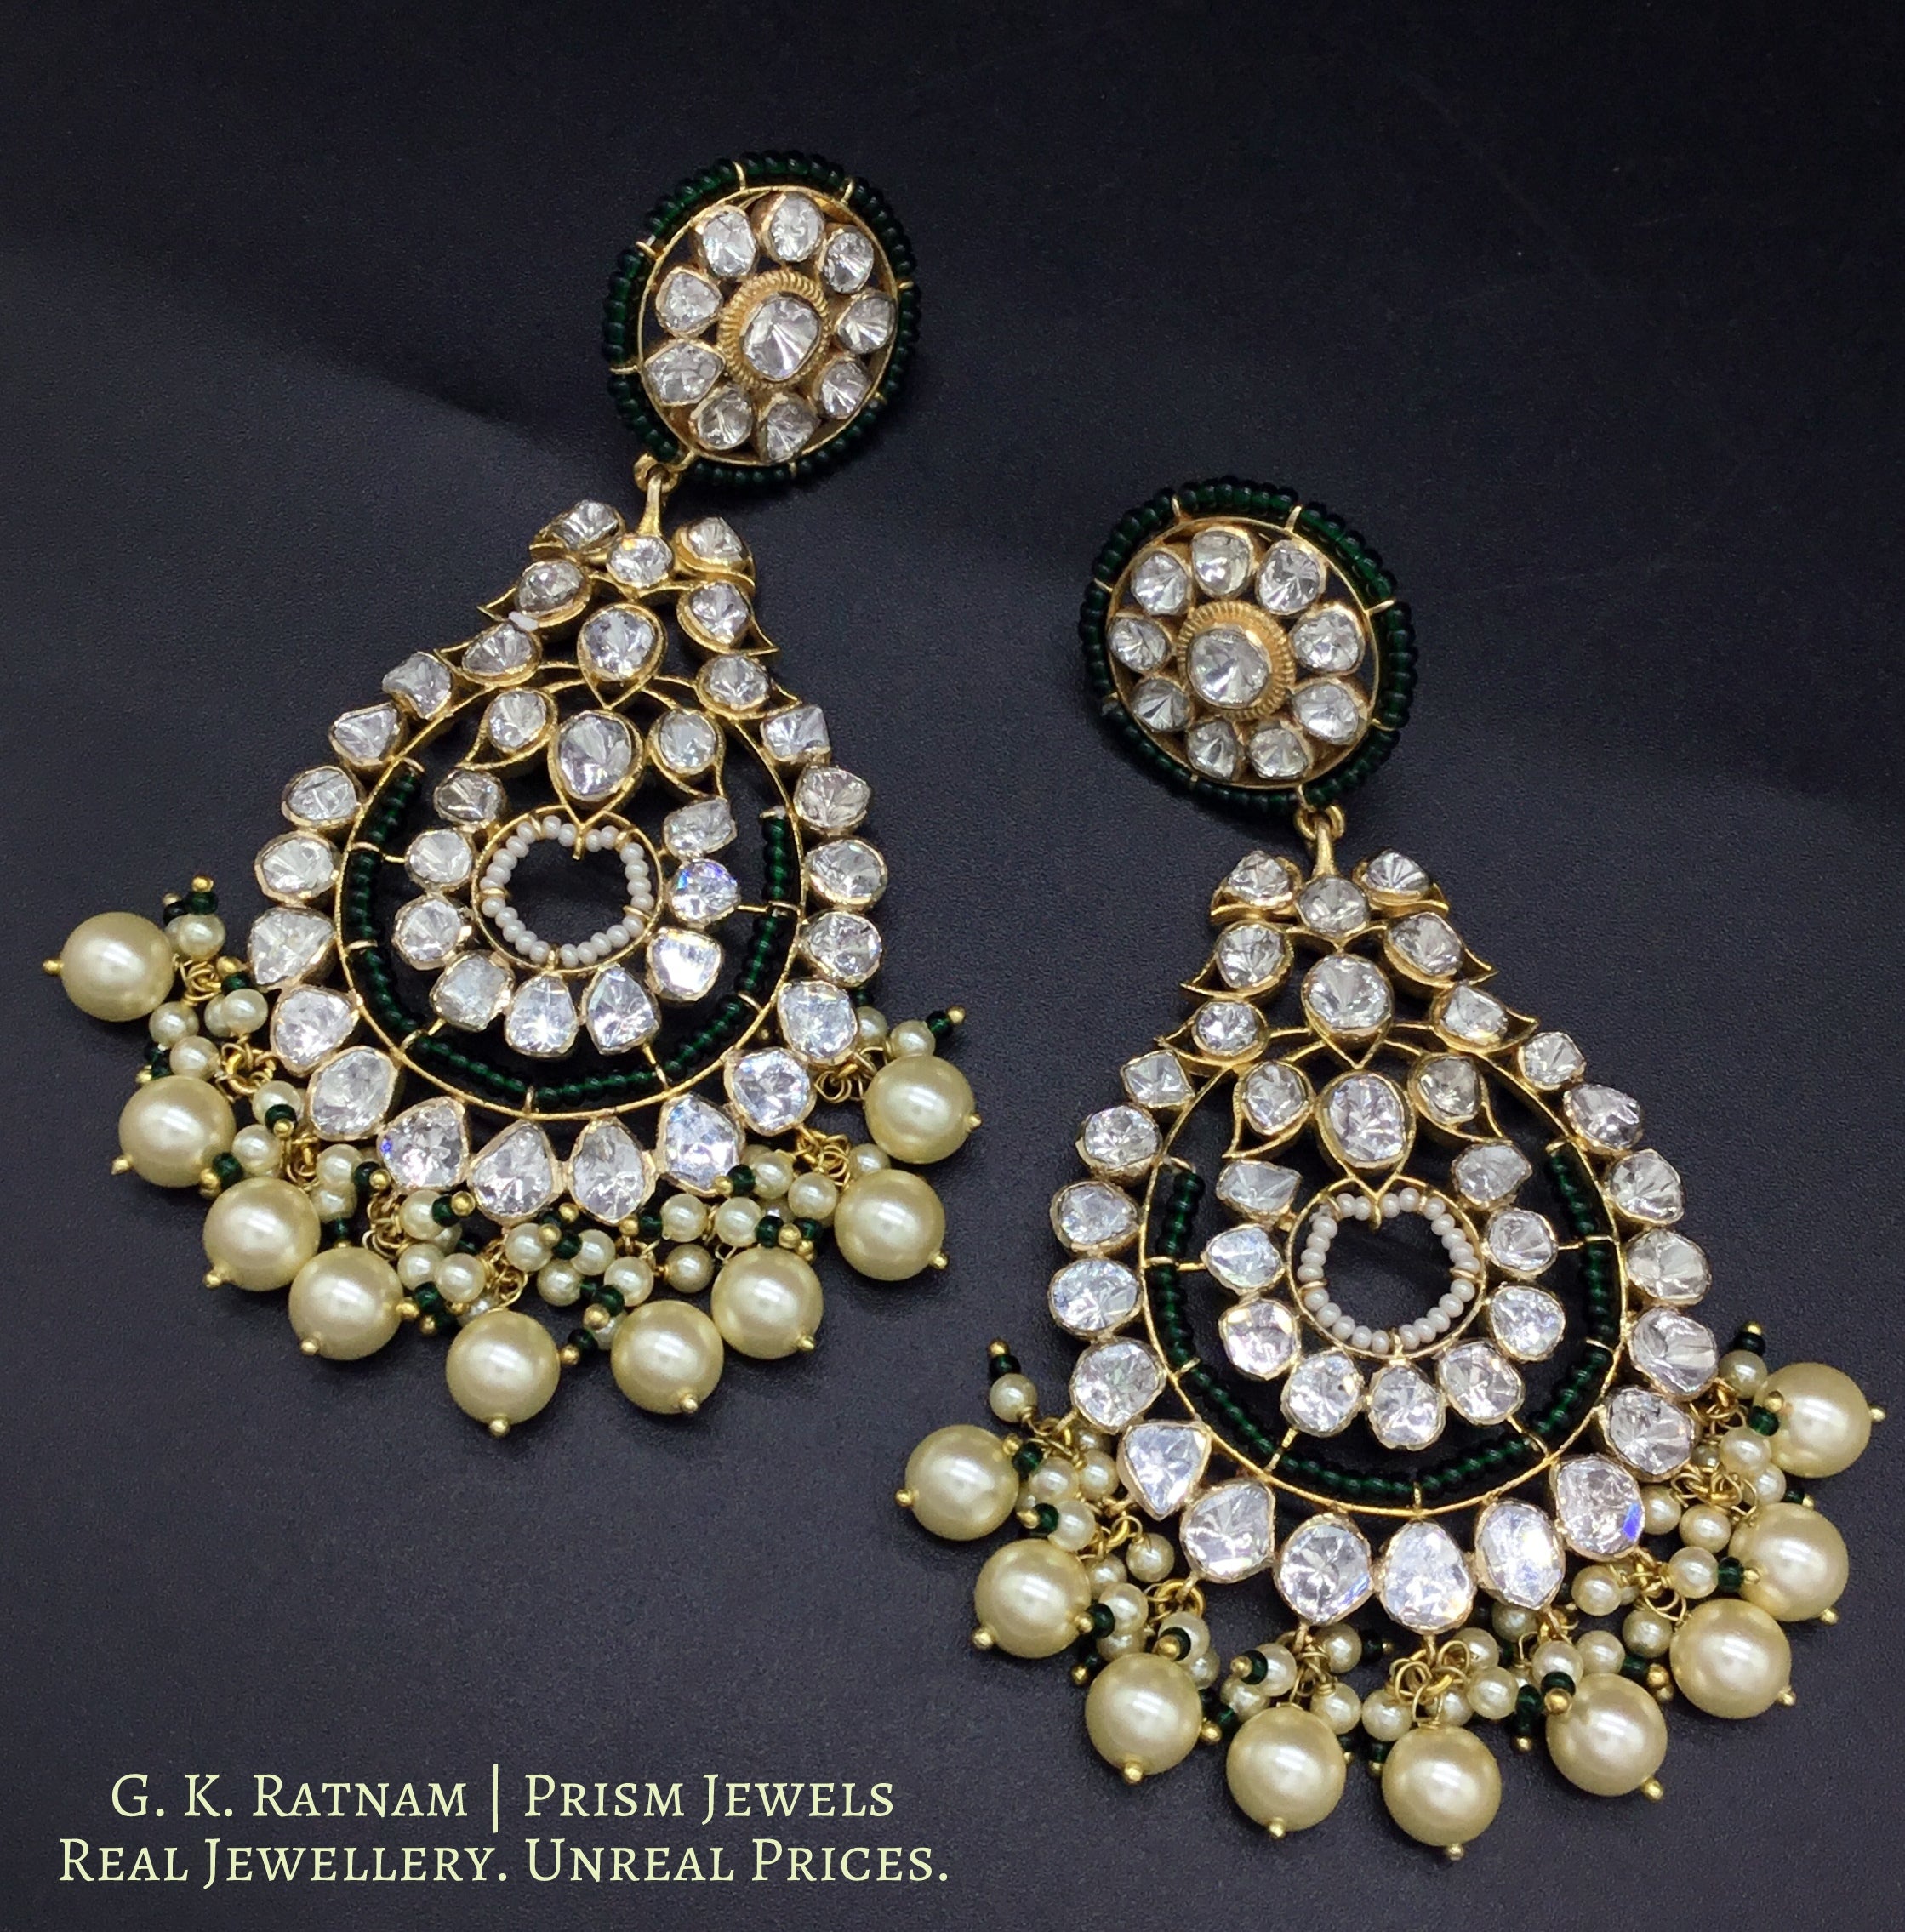 14k Gold and Diamond Polki Open Setting Chand Bali Earring pair with triple-coated shell pearls and a touch of dark green - gold diamond polki kundan meena jadau jewellery